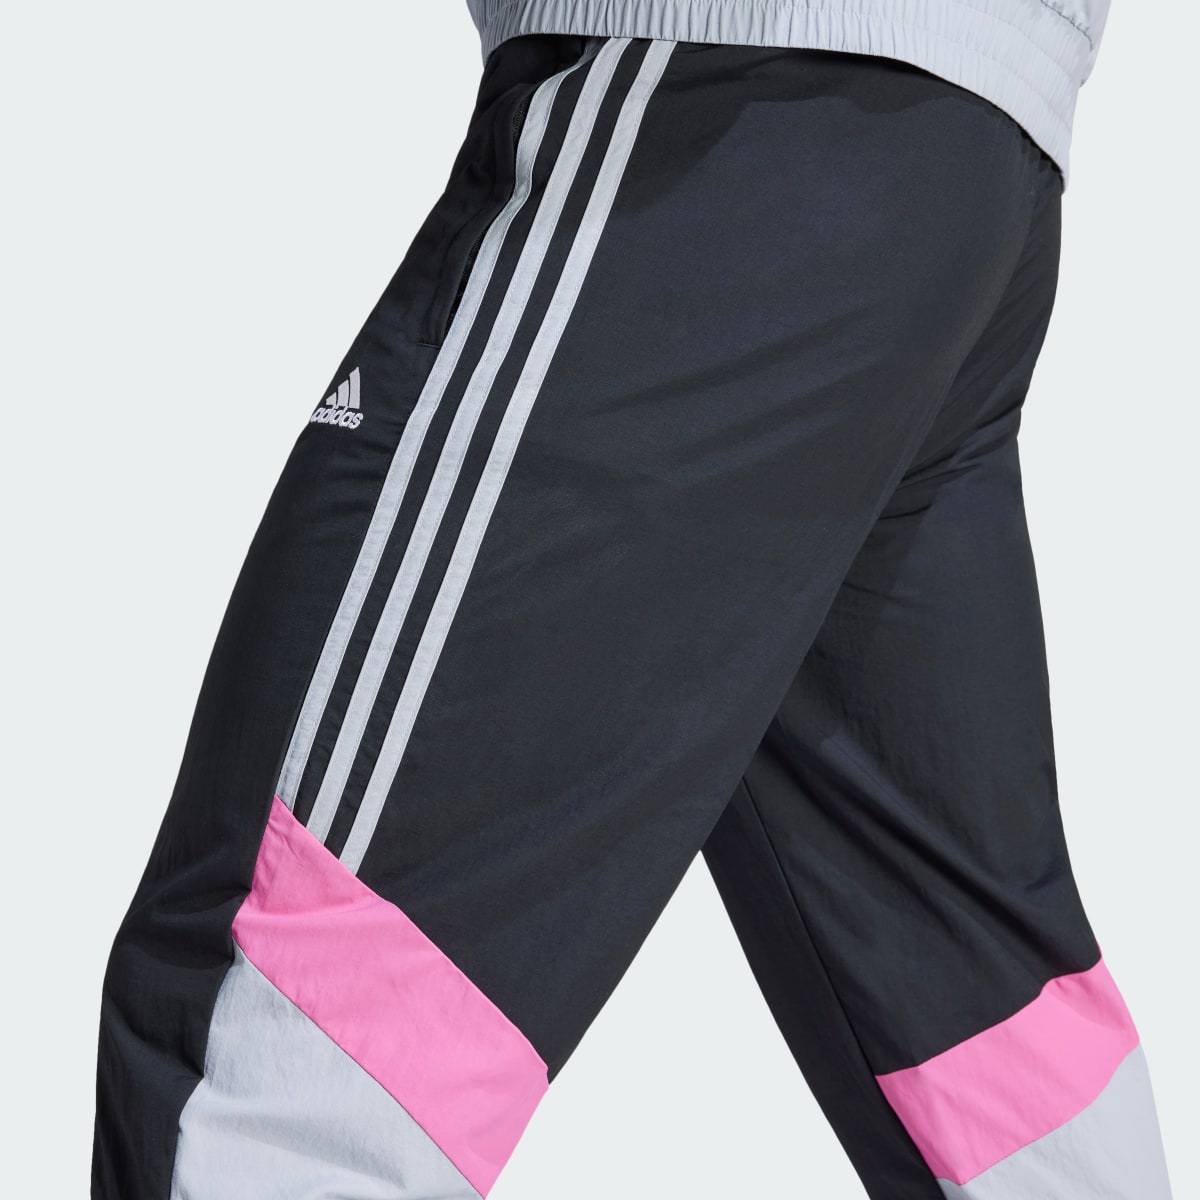 Adidas Juventus Woven Track Pants. 7